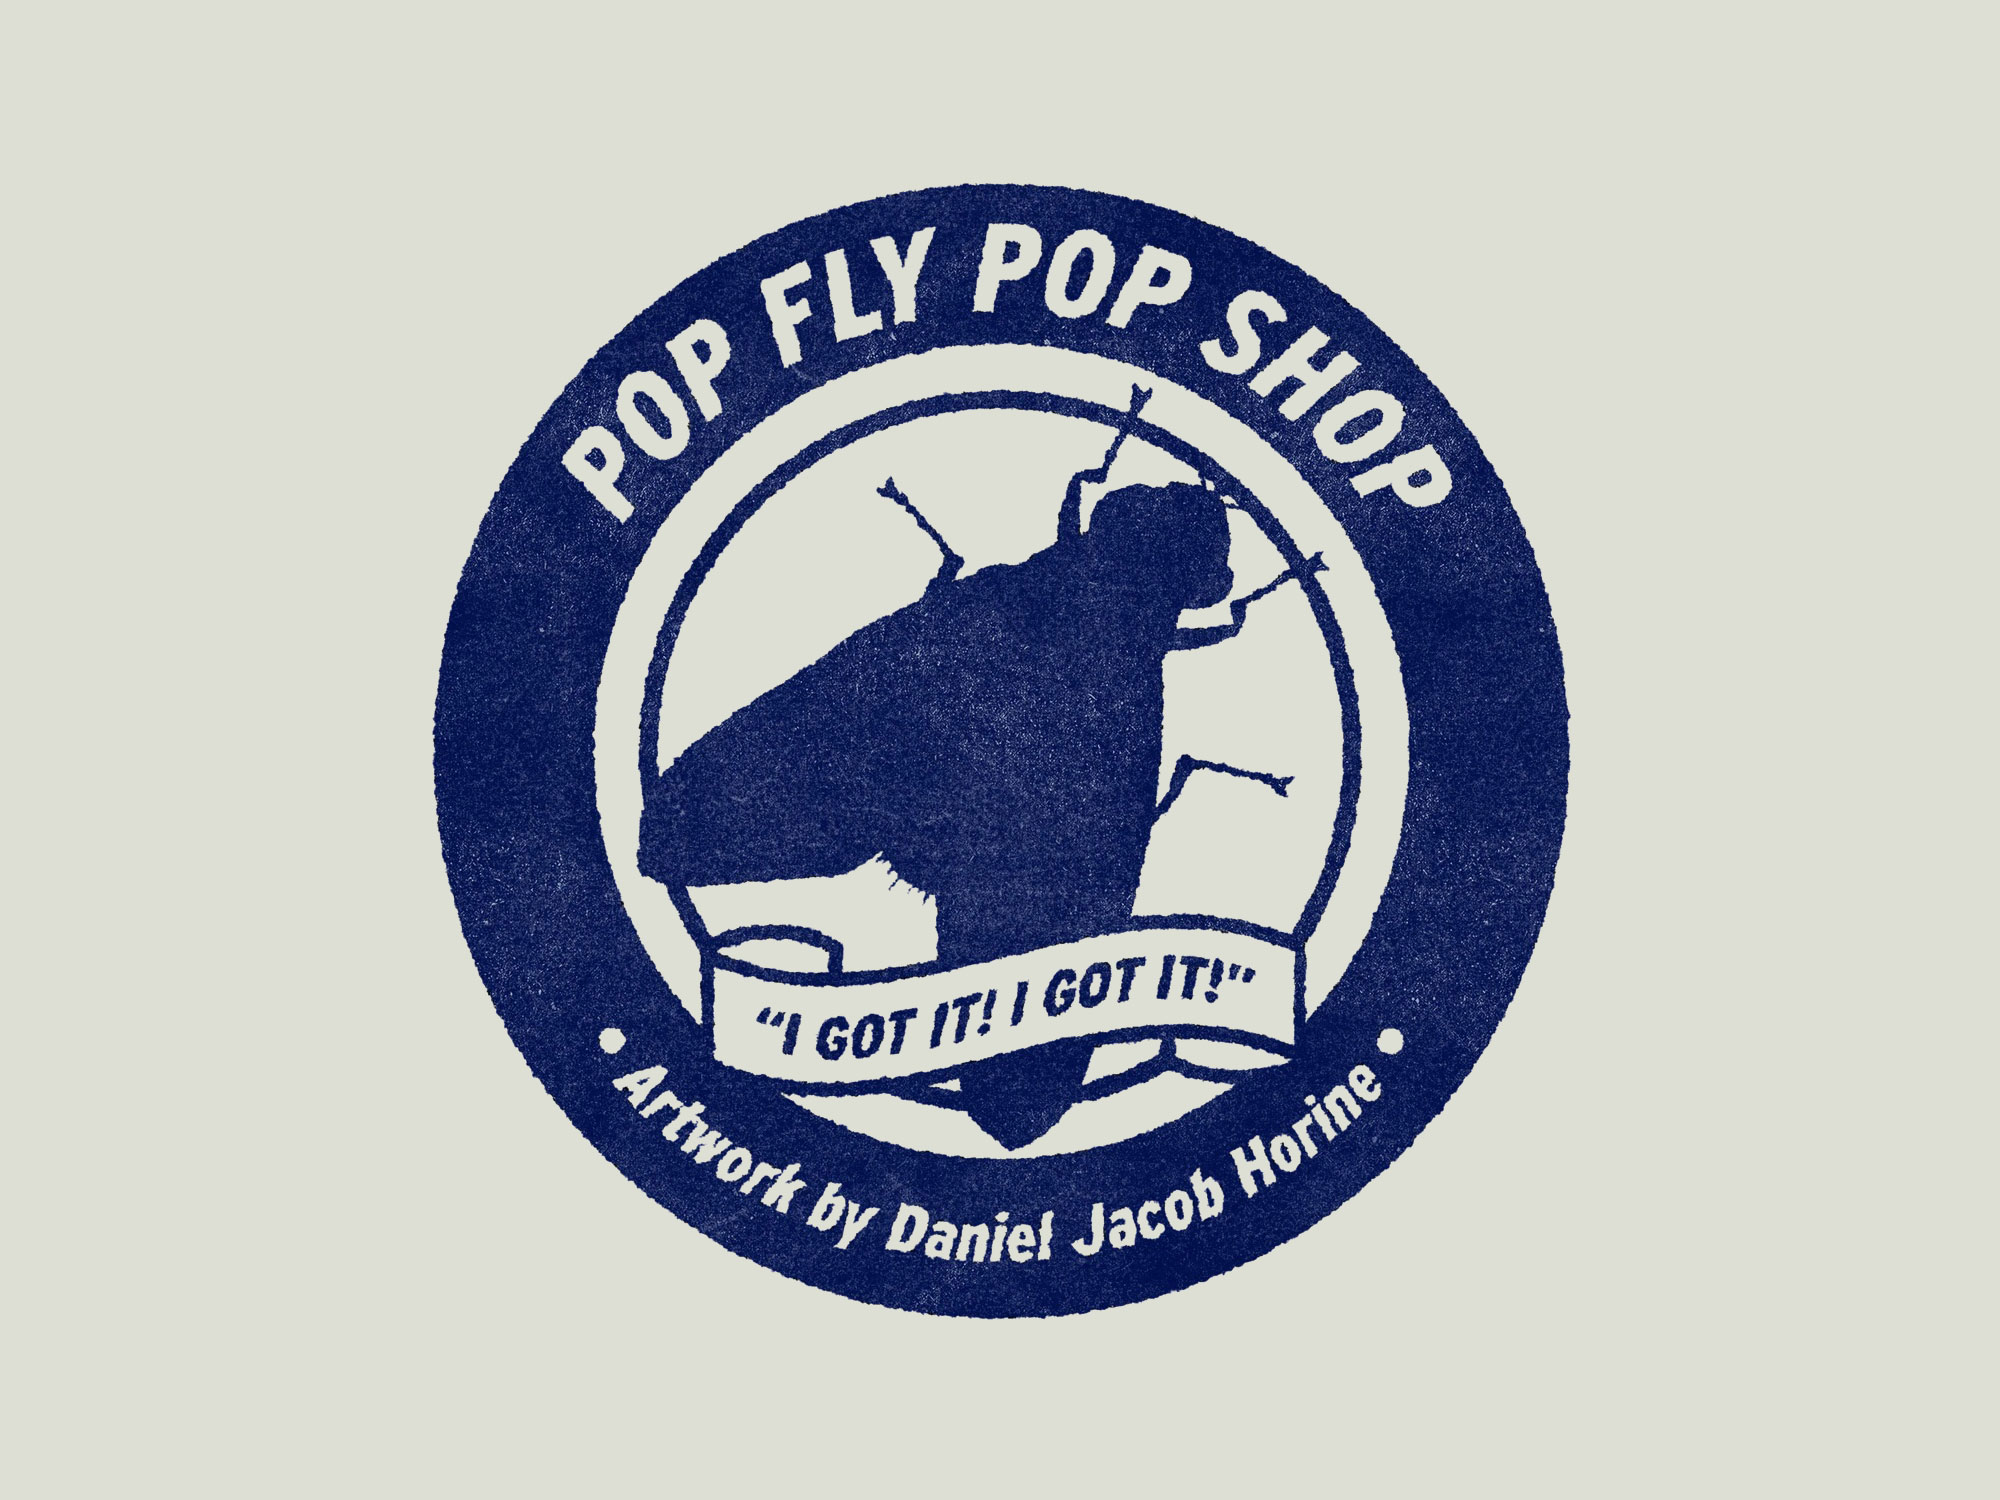 Pop Fly Pop Shop